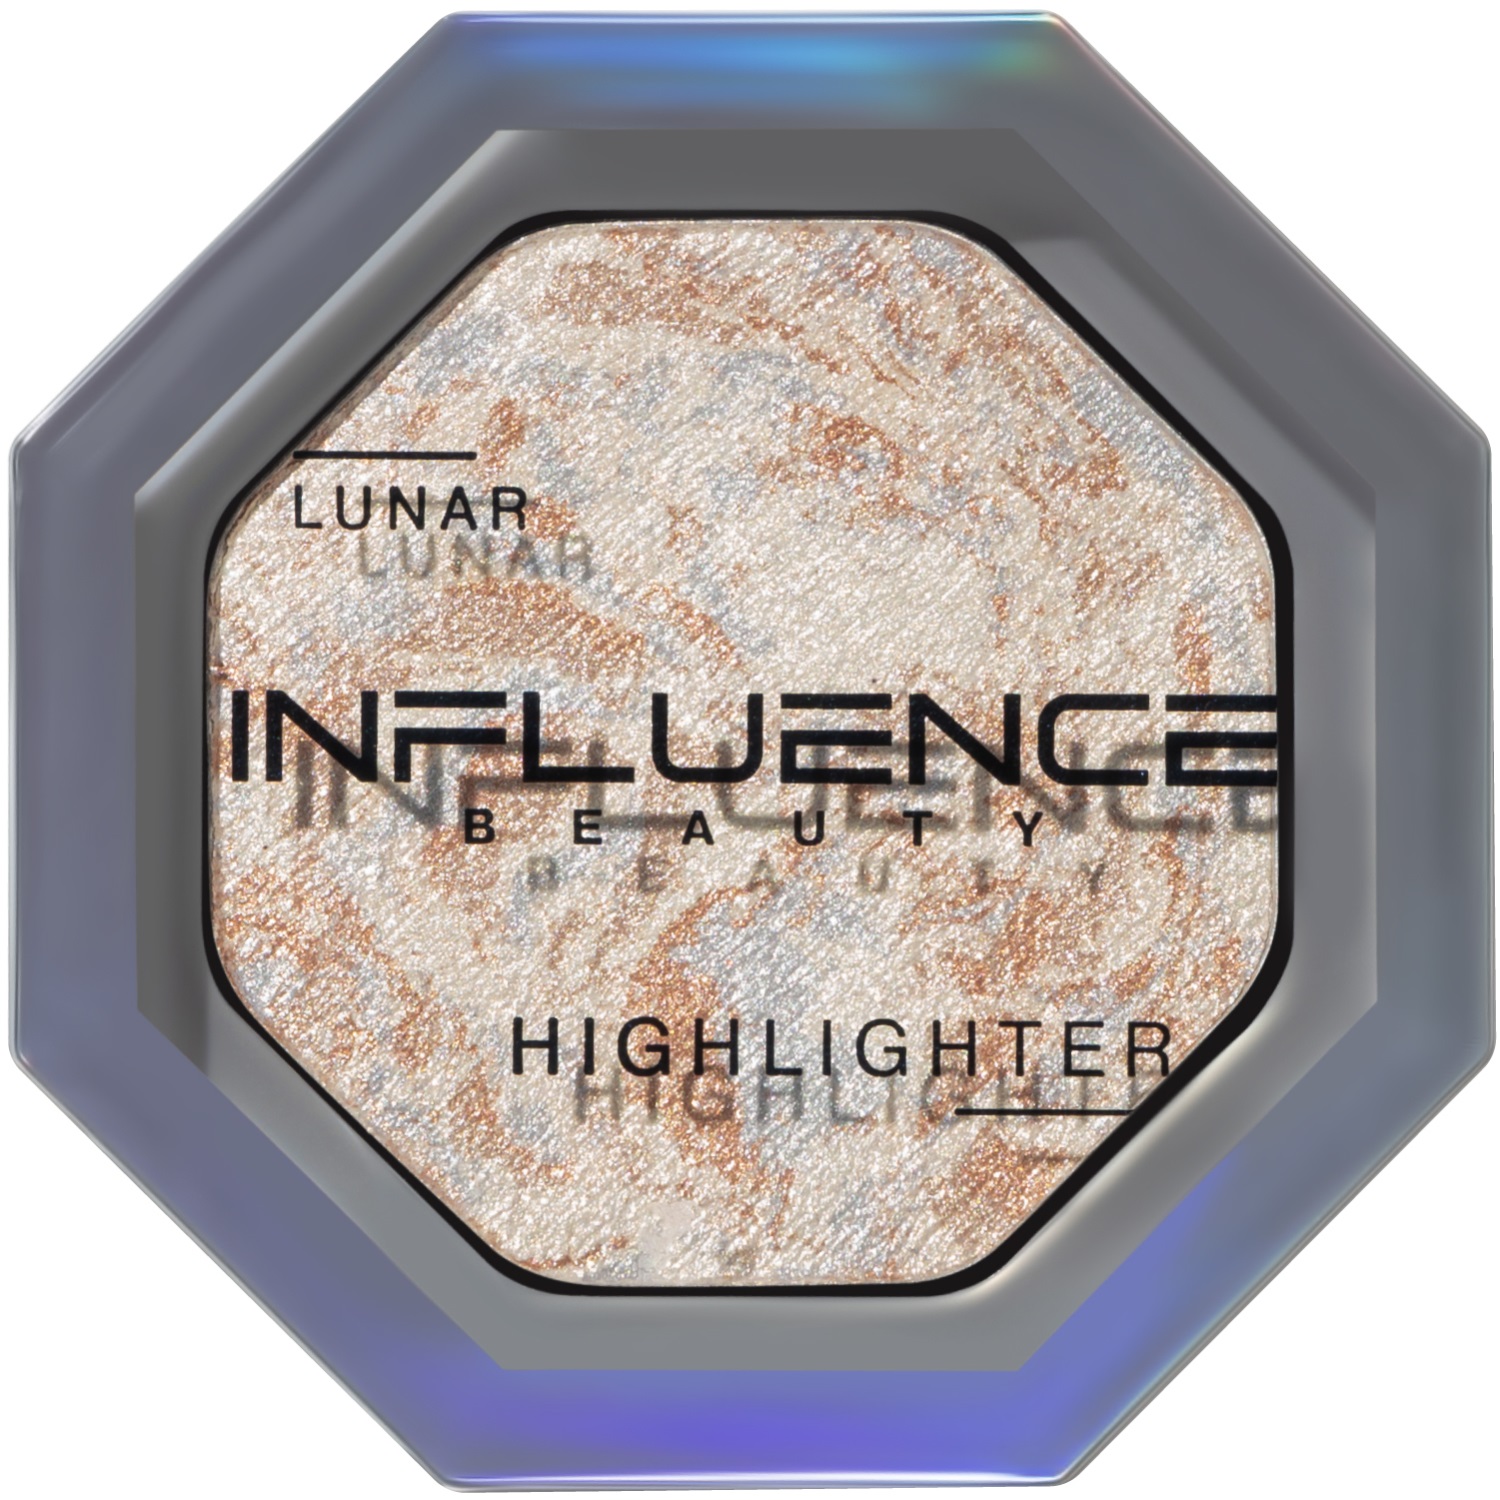 INFLUENCE beauty Хайлайтер Lunar с сияющими частицами, серебряный, 4,8 г (INFLUENCE beauty, Лицо) influence beauty хайлайтер influence beauty lunar с сияющими частицами 3 шт